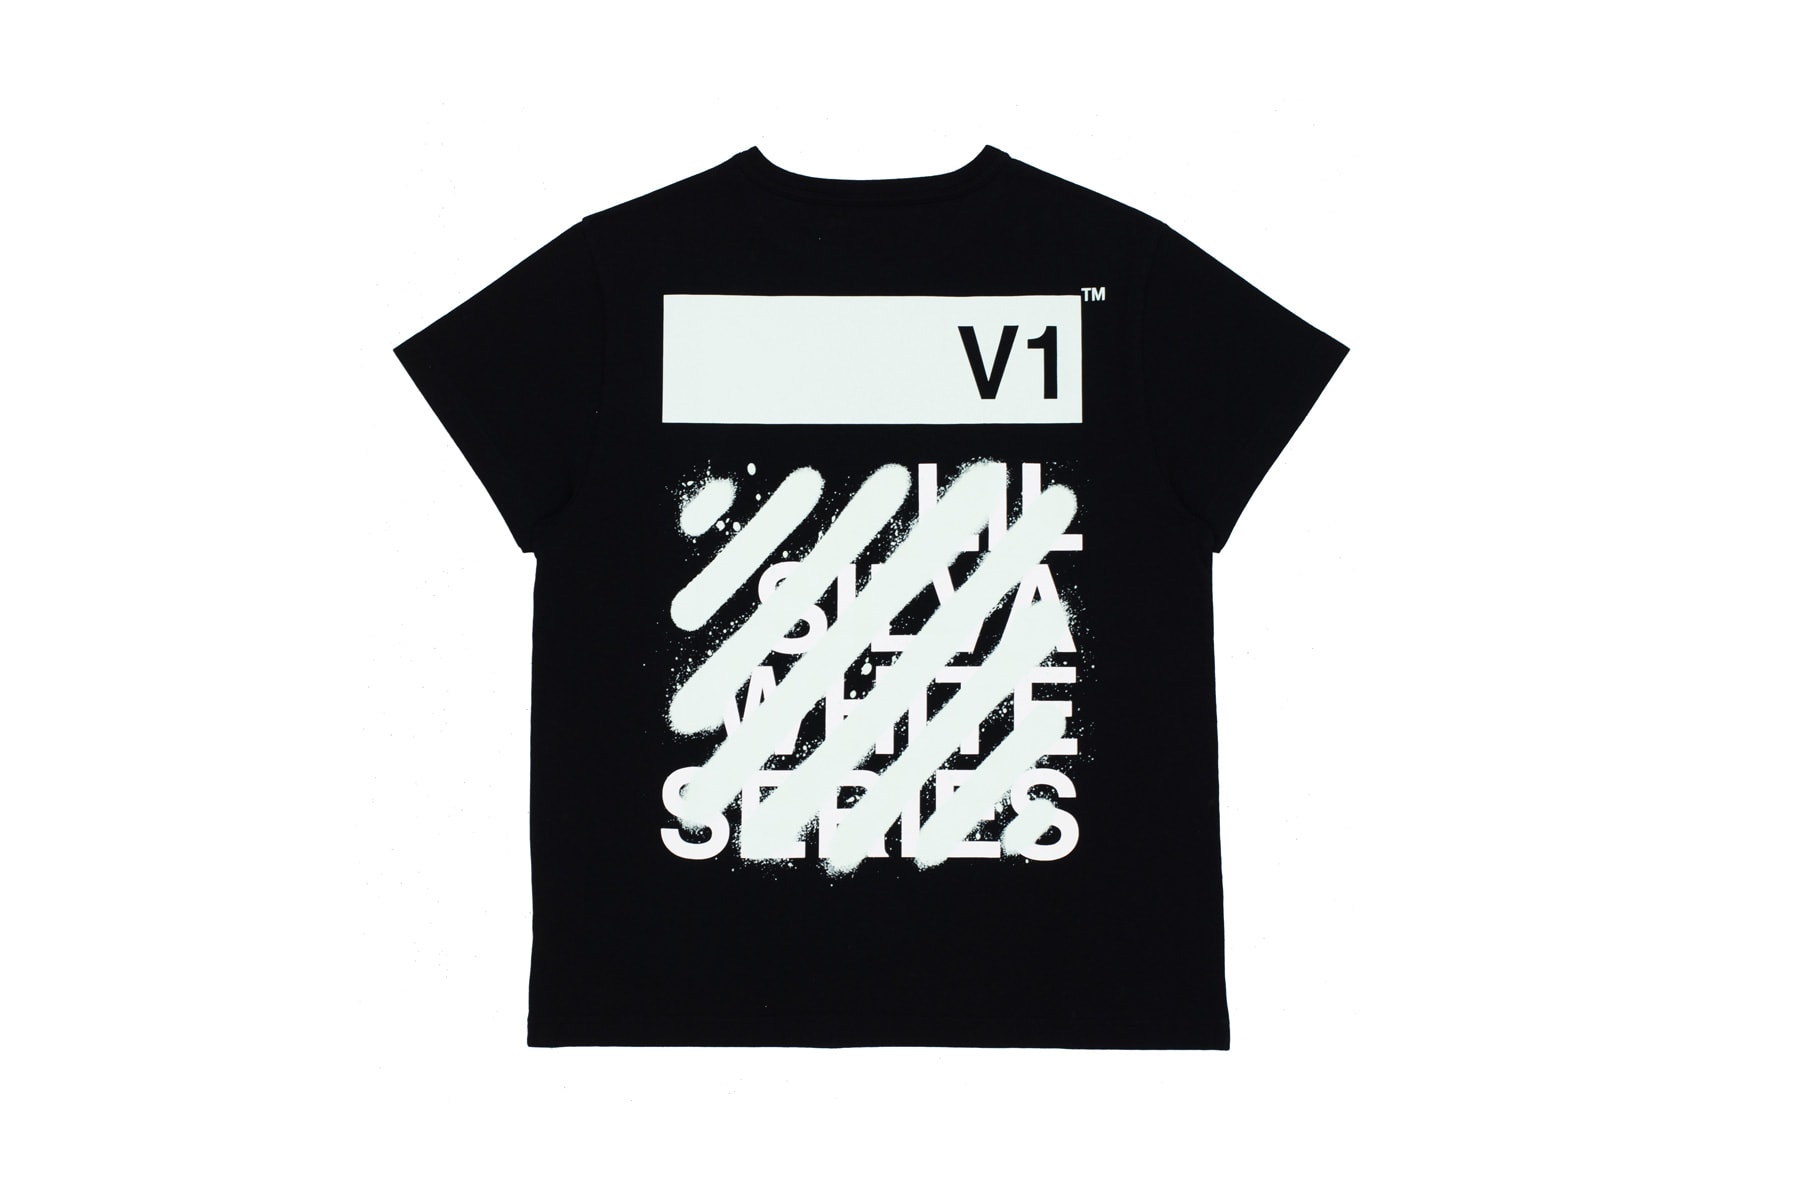 OFF-WHITE Lil Silva 2016 Fall Winter Collaboration Vinyl Music T-shirt Tees Virgil Abloh